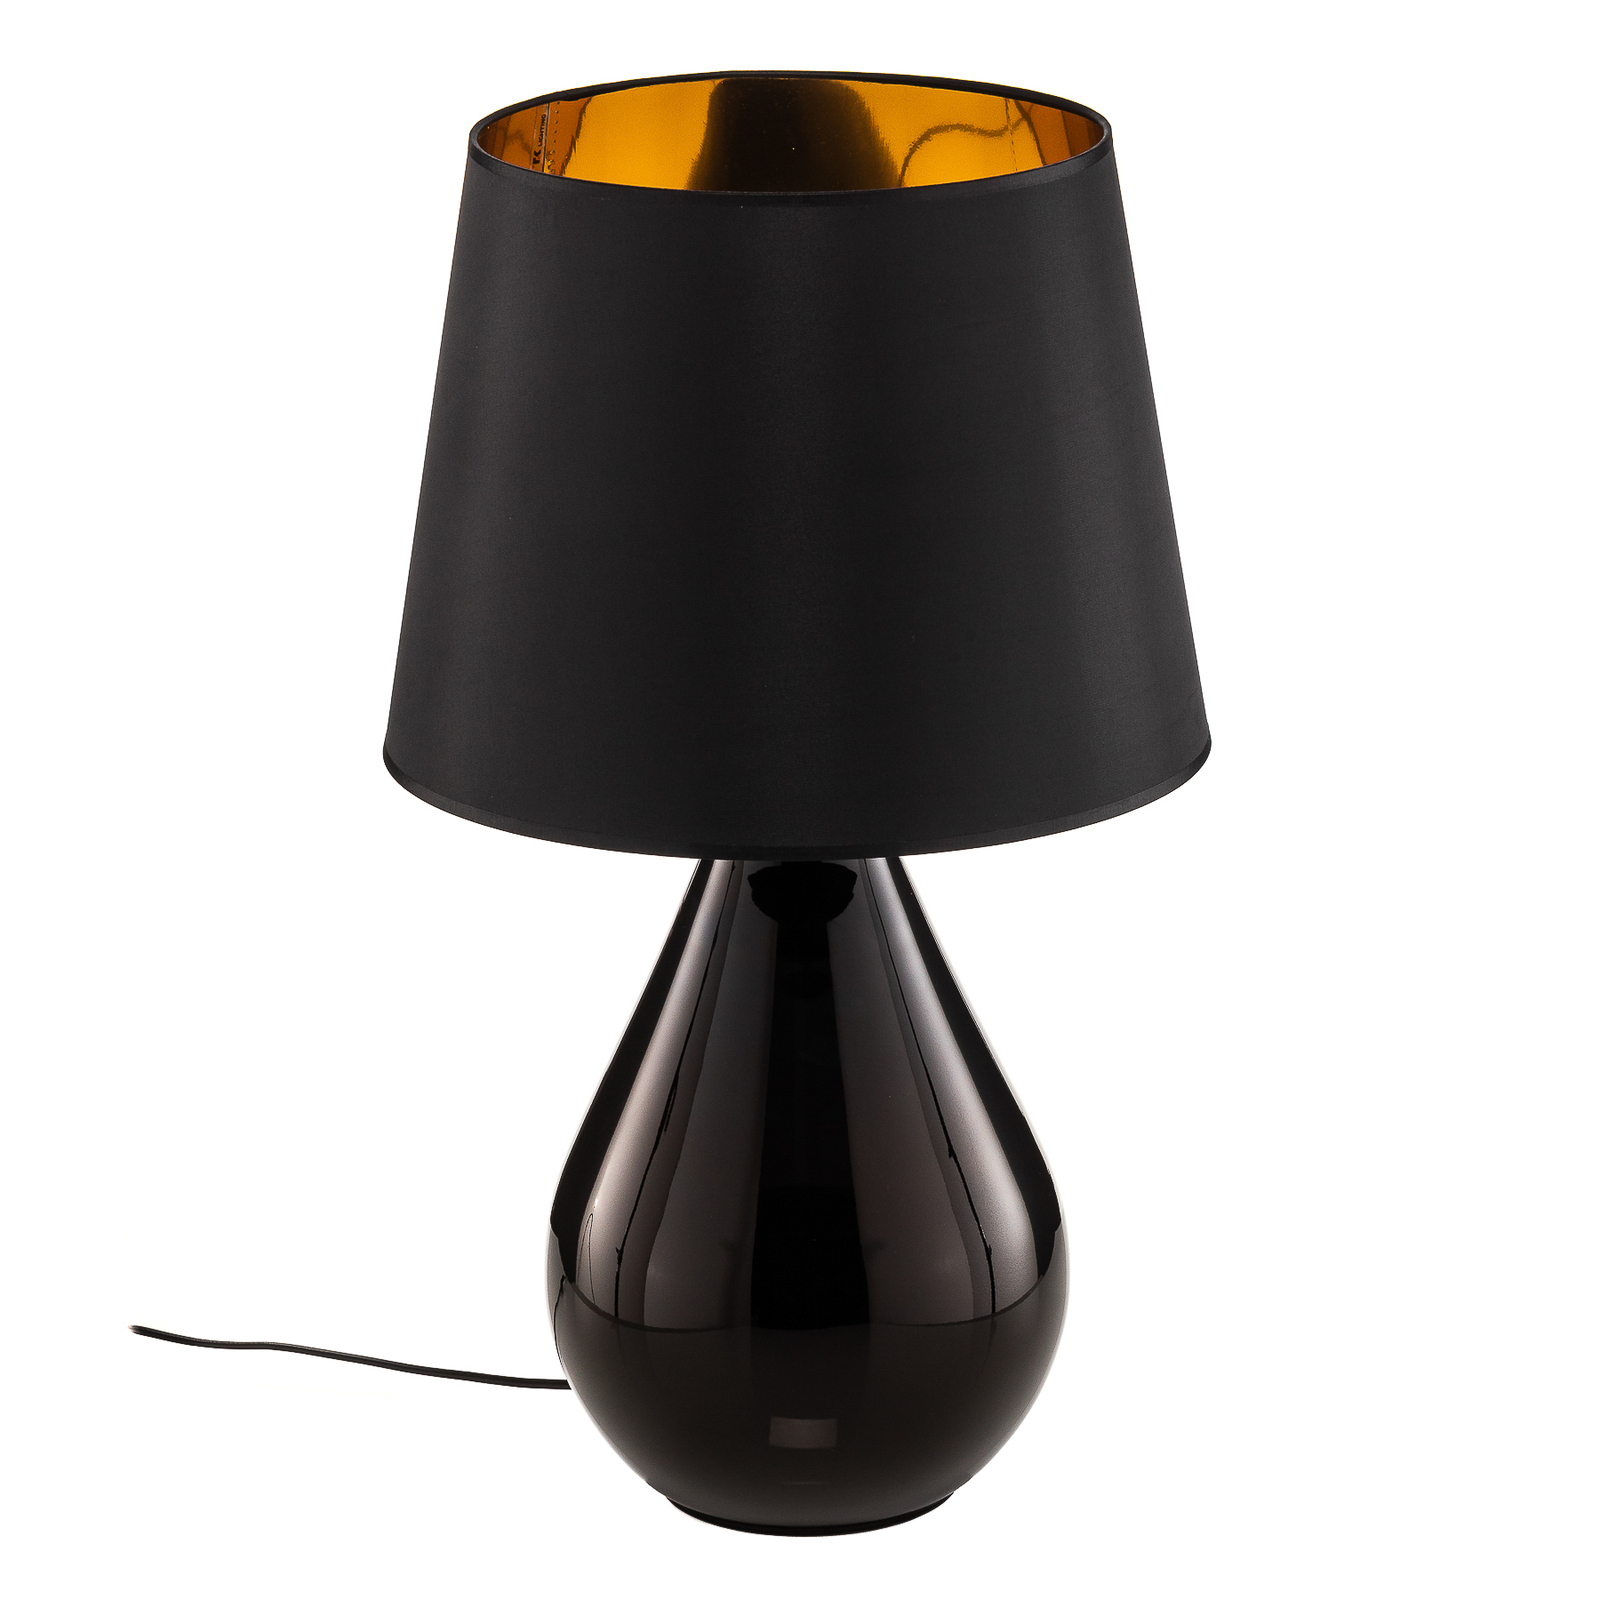 Lacrima bordslampa, svart/guld